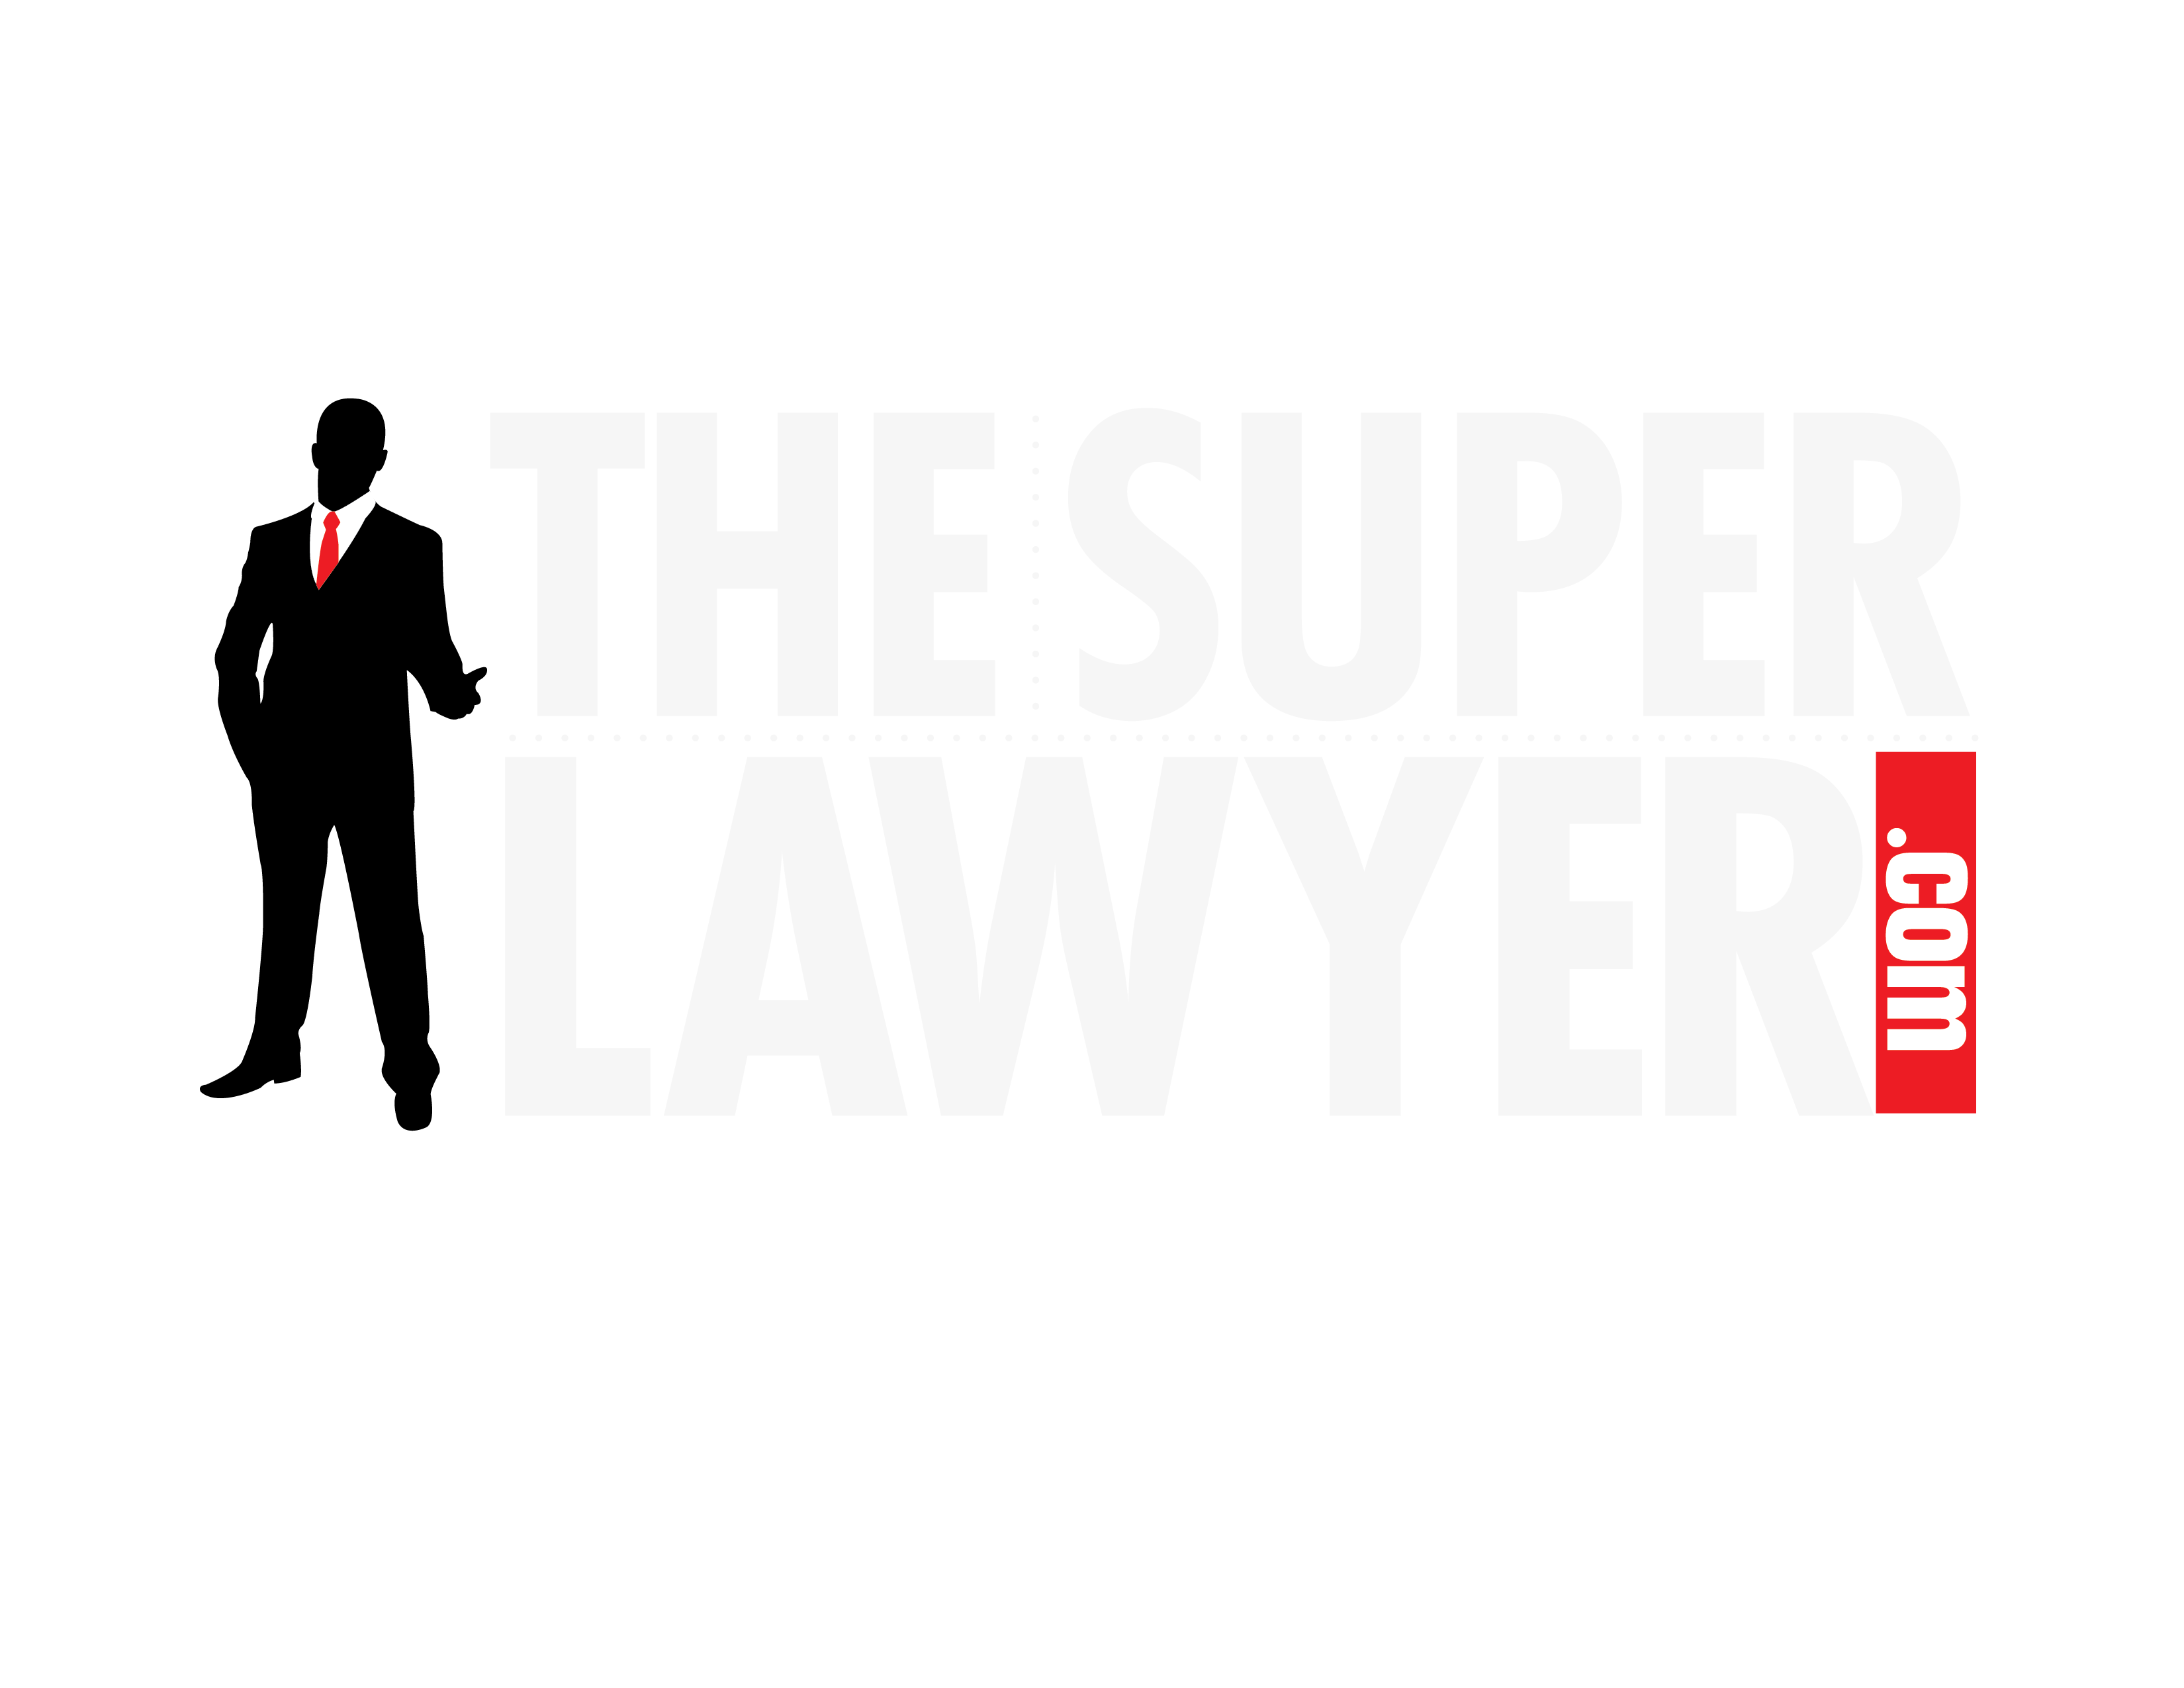 Super Lawyer Logo